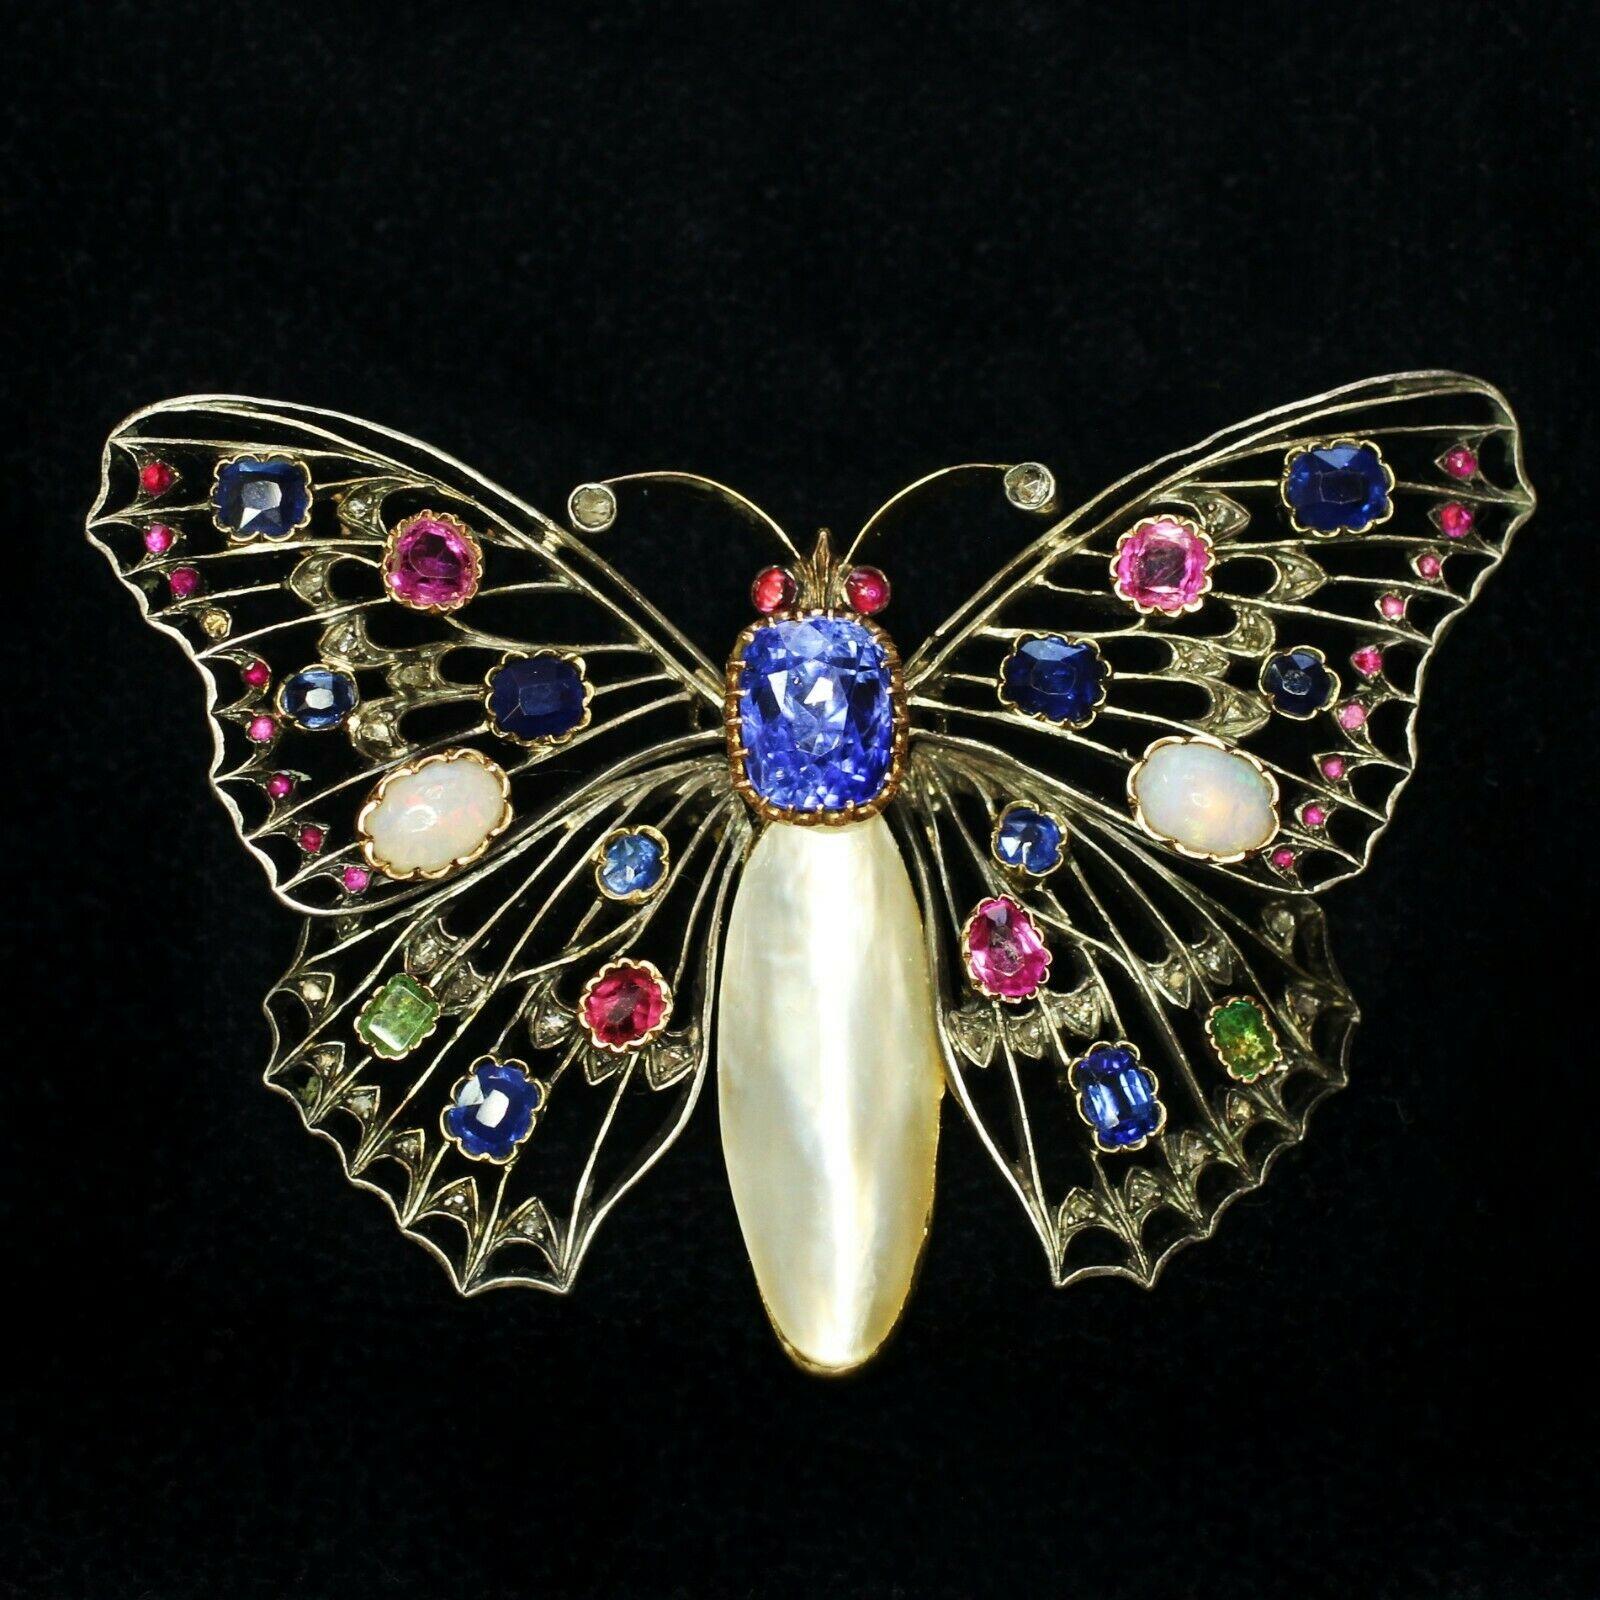 1890s-1910s Era Art Nouvea Vintage Butterfly Pendant Decorated with Multi Stones 1